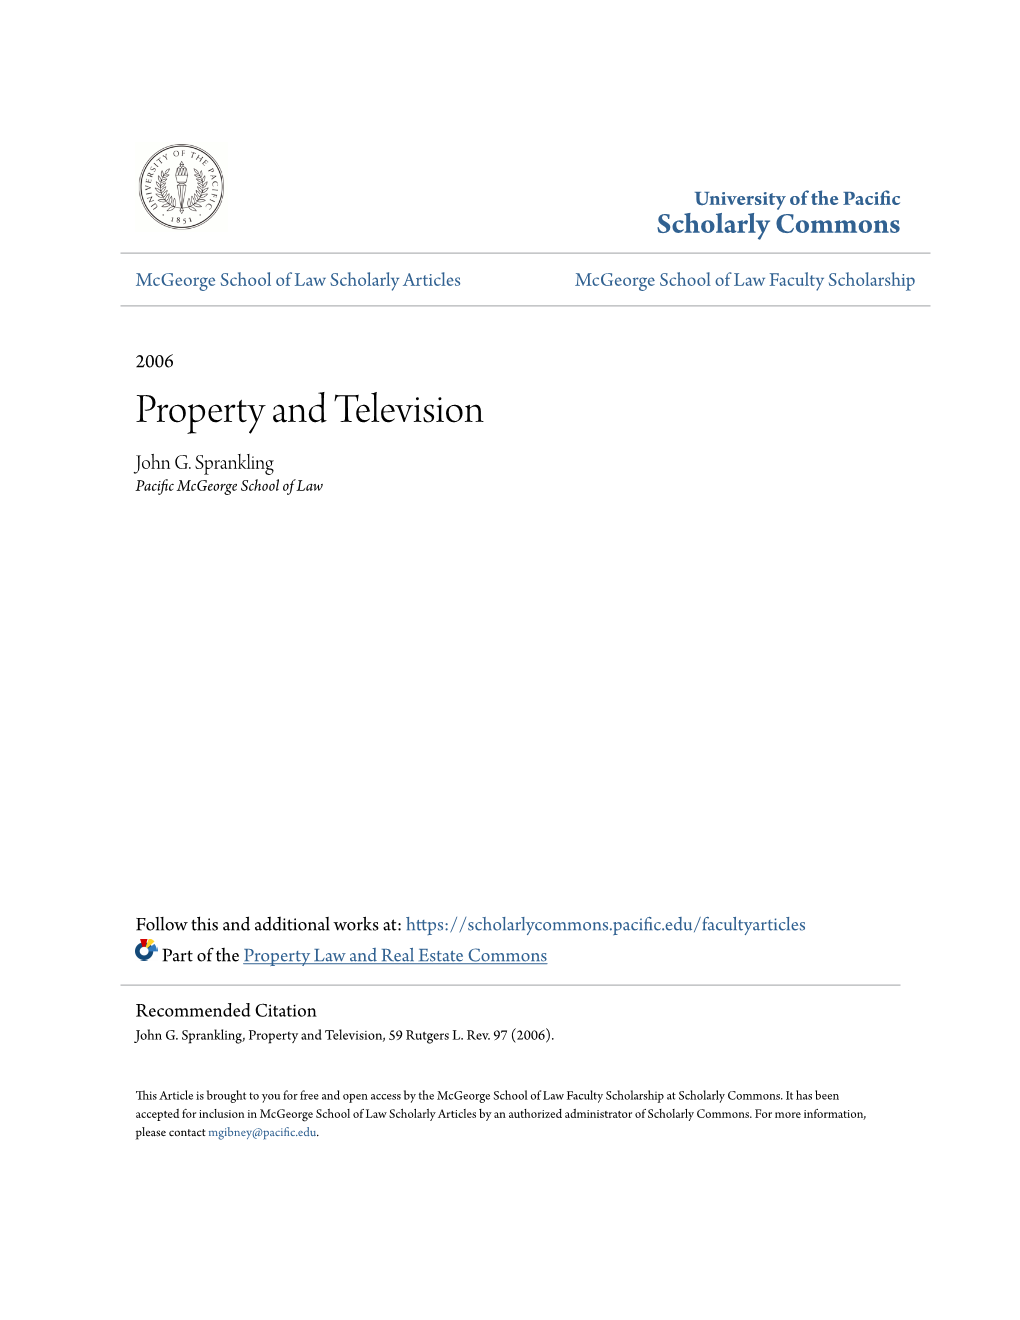 Property and Television John G